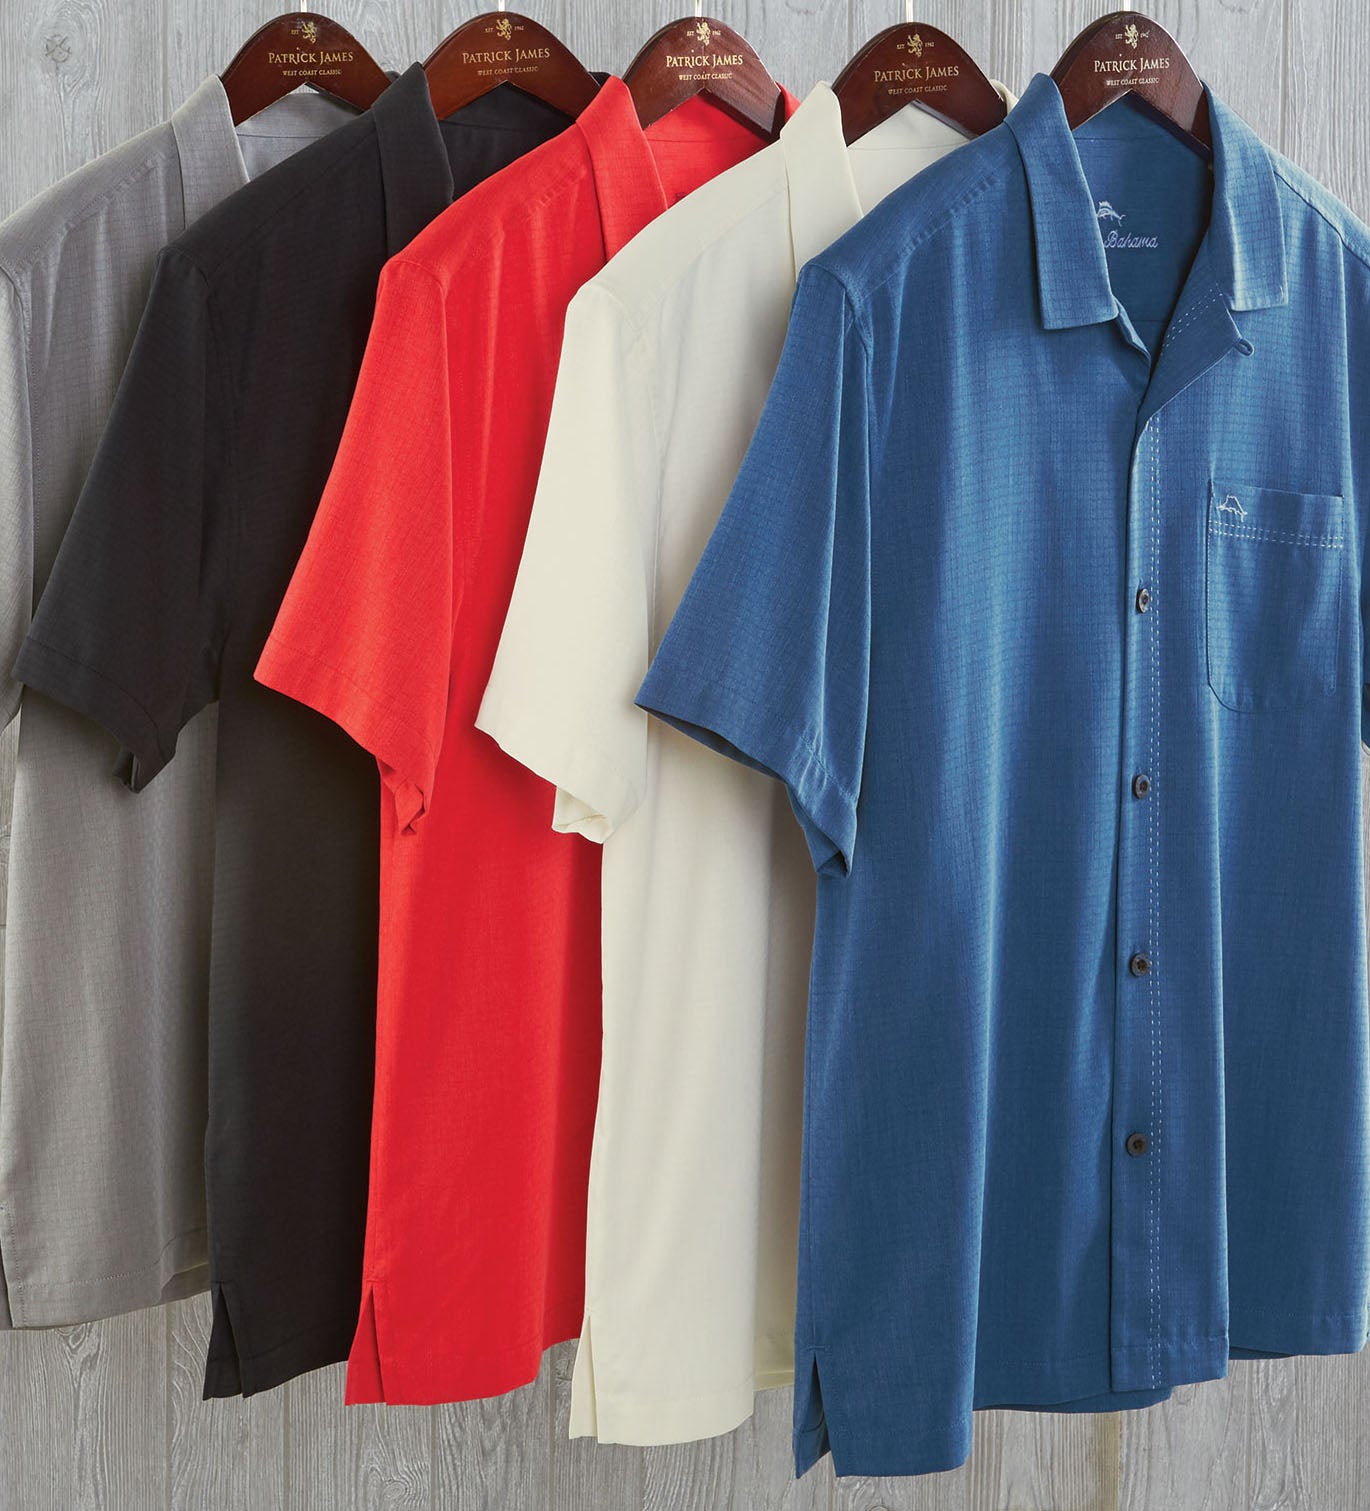 Tommy Bahama Coastal Breeze Check Shirt XL / Continental